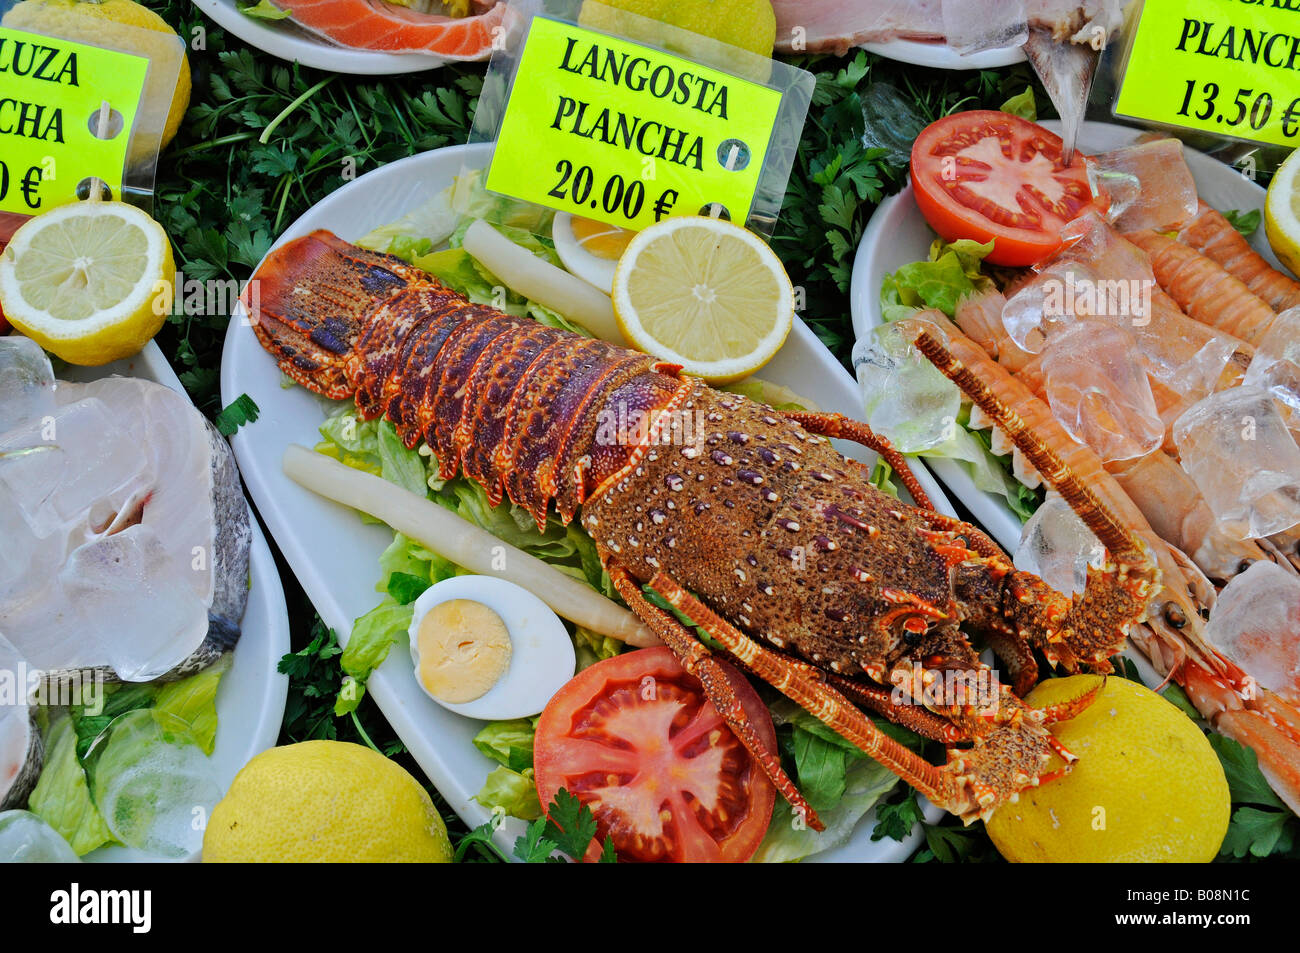 Crawfish at a seafood restaurant, Calpe, Alicante, Costa Blanca, Spain Stock Photo